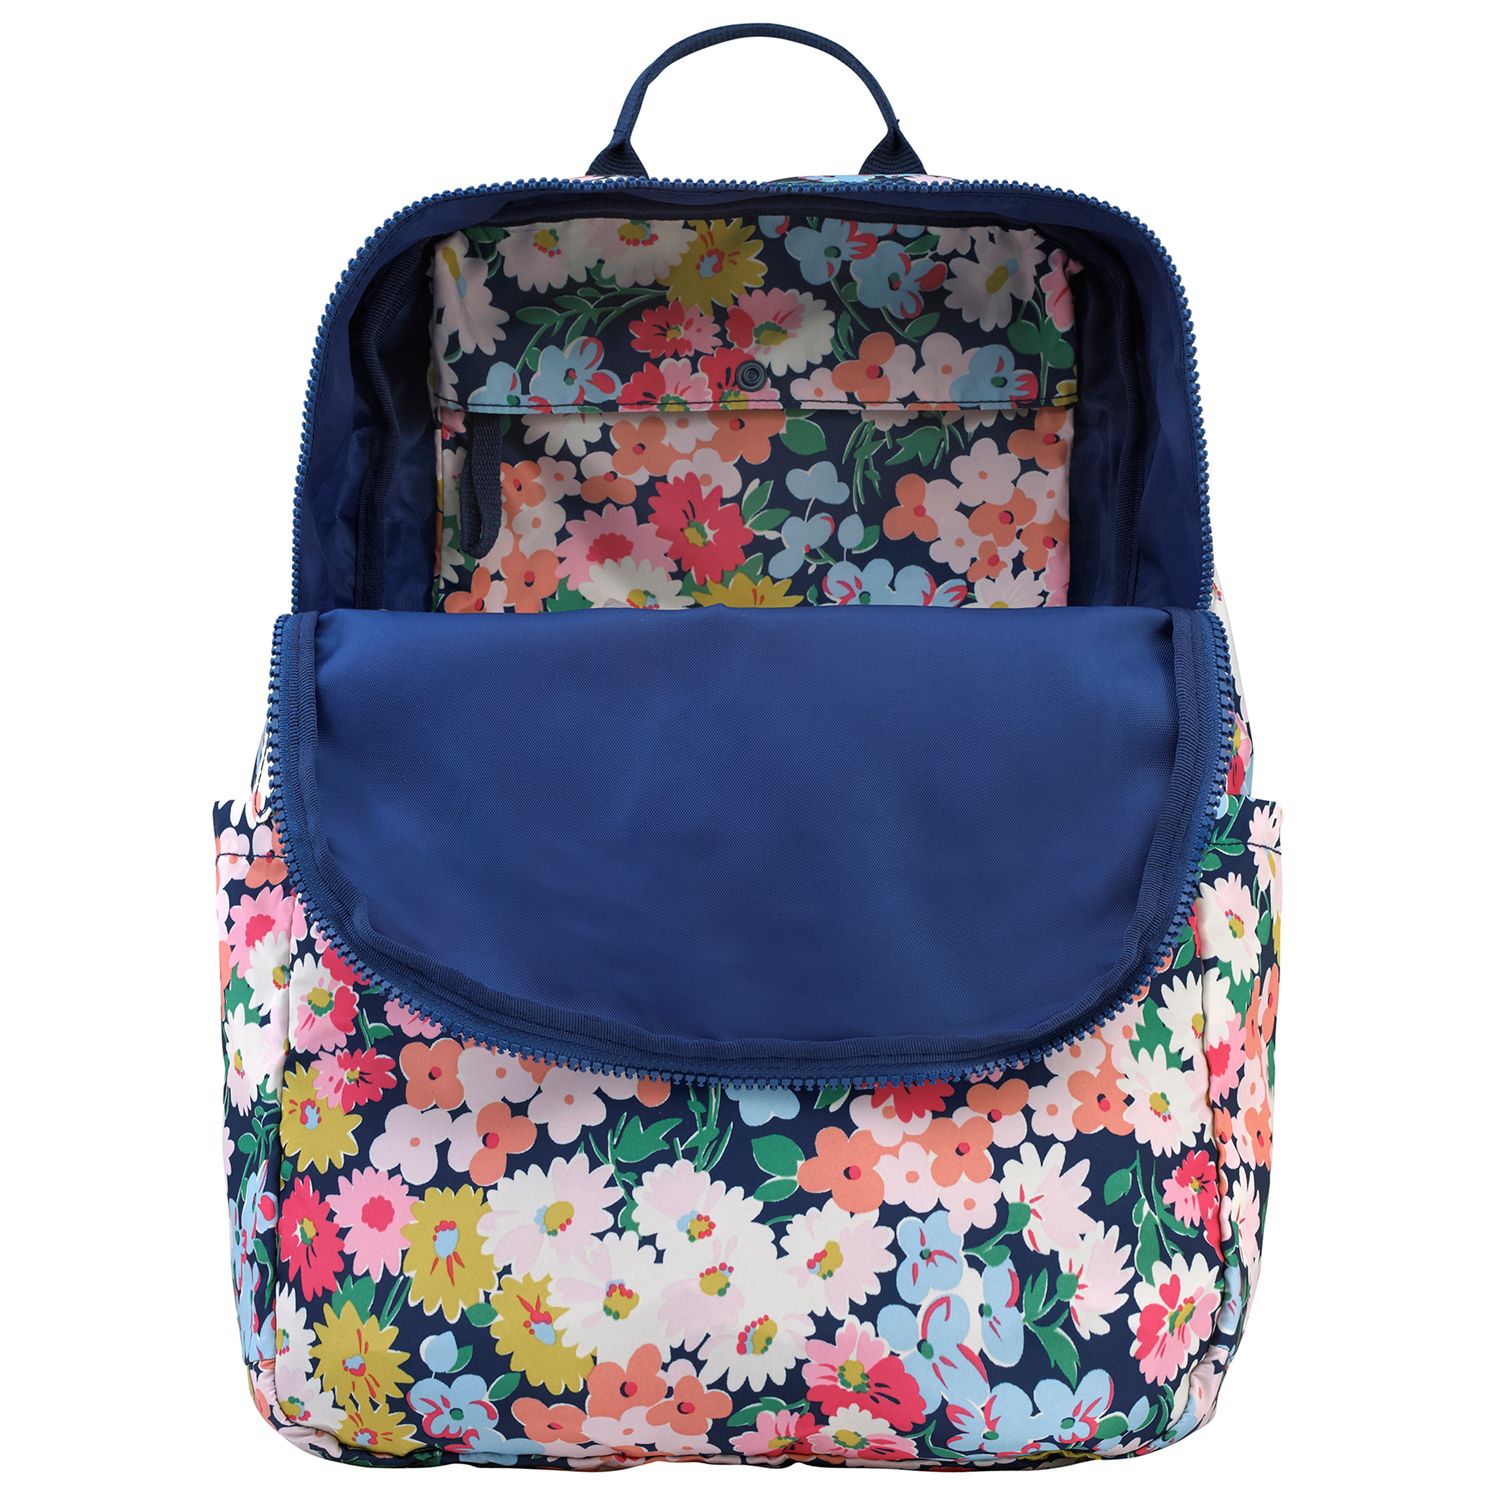 cath kidston foldaway backpack